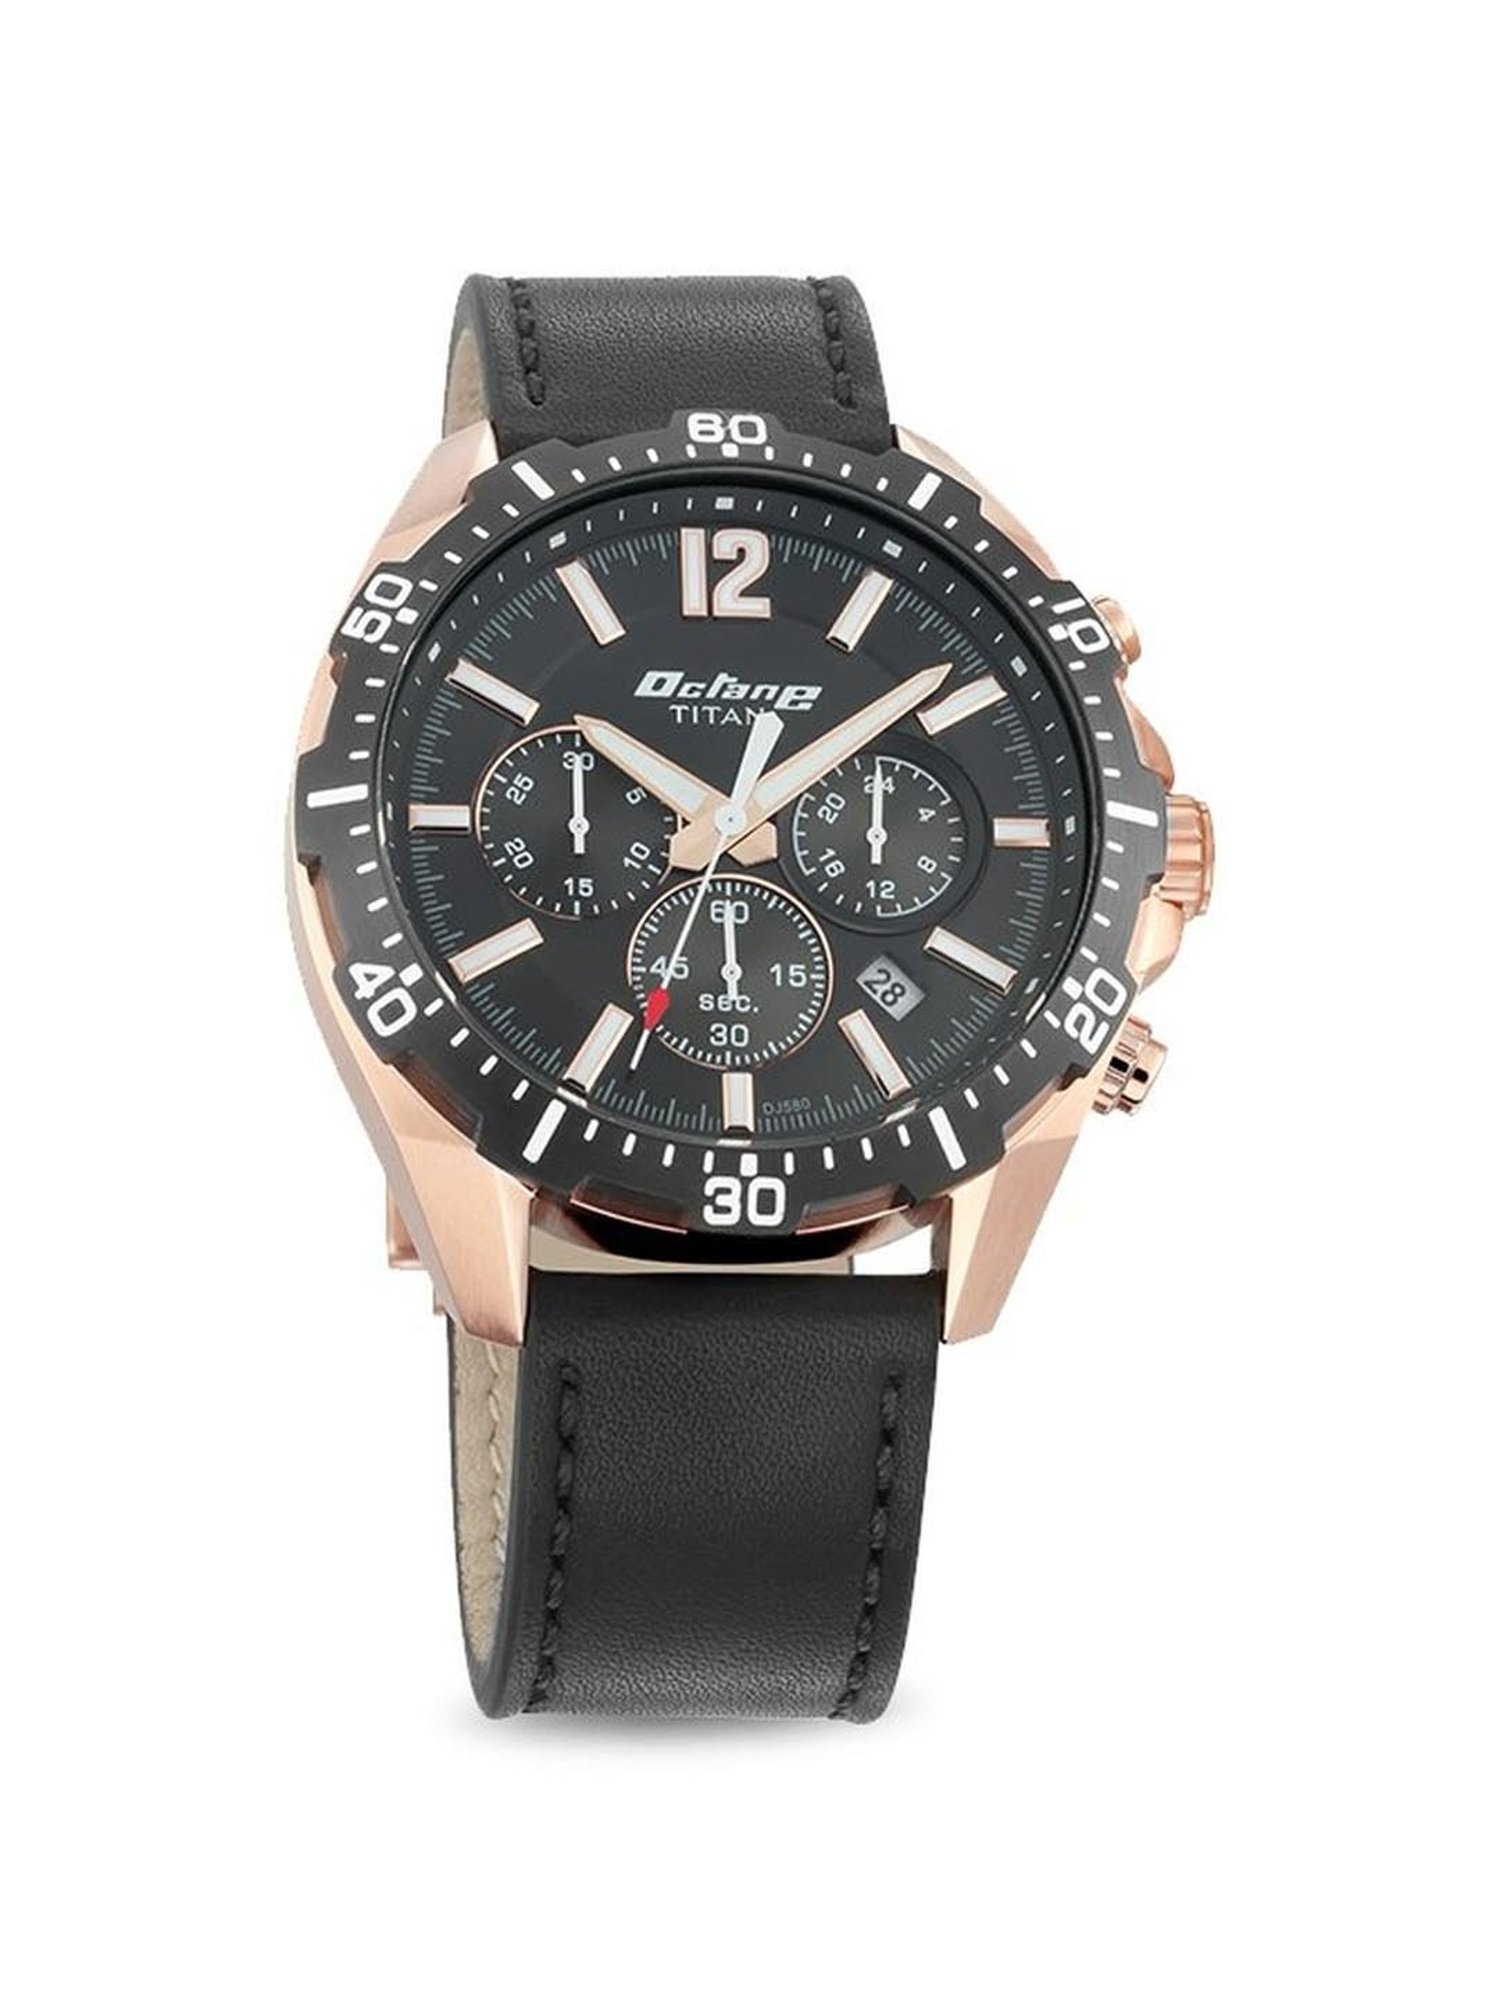 Men's S/Steel Black Rubber Octane Watch W1047G1 - Watches from Hillier  Jewellers UK